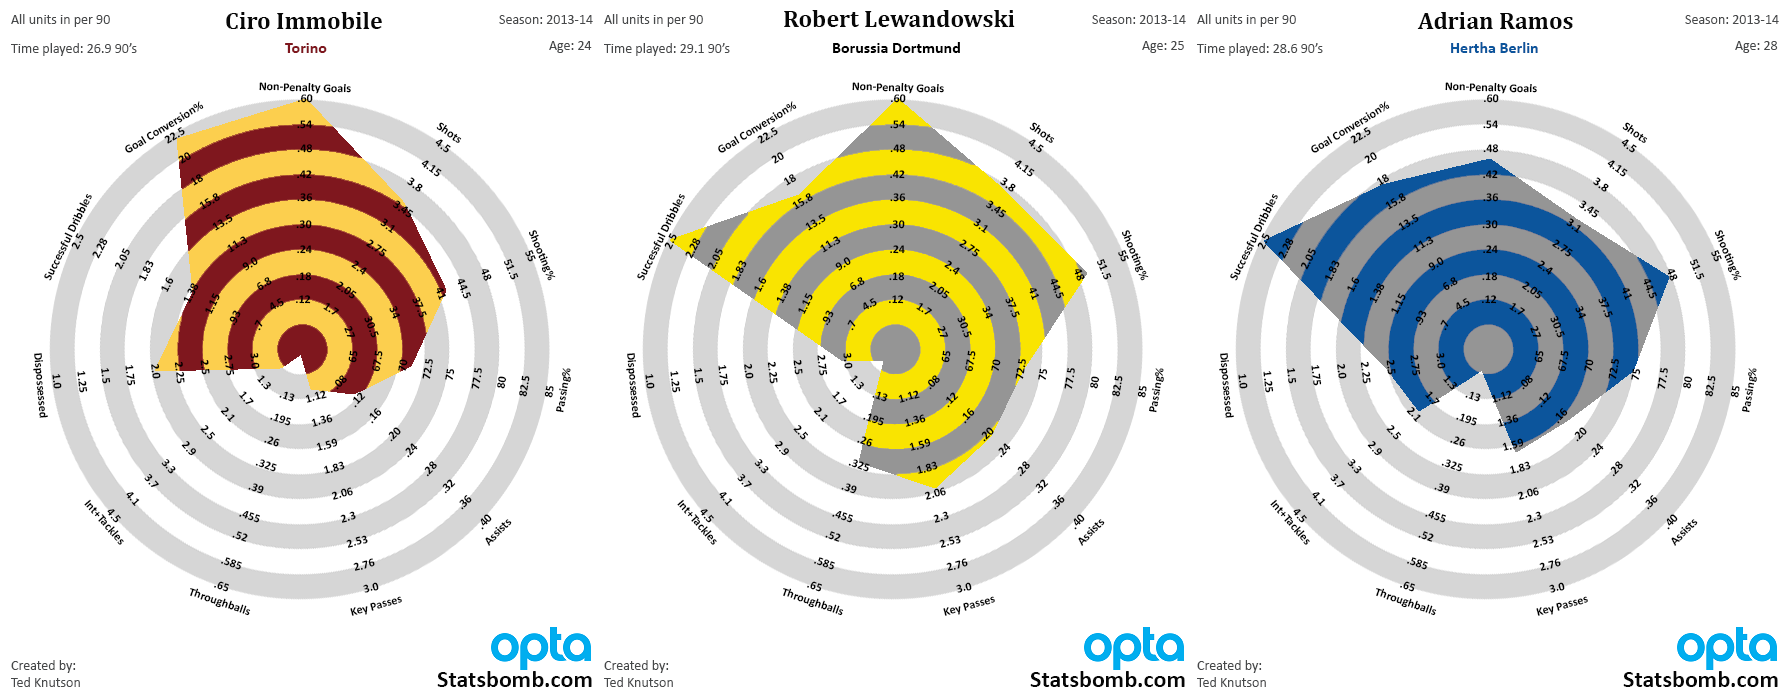 Radar-Immobile-Lewandowski-Ramos.png